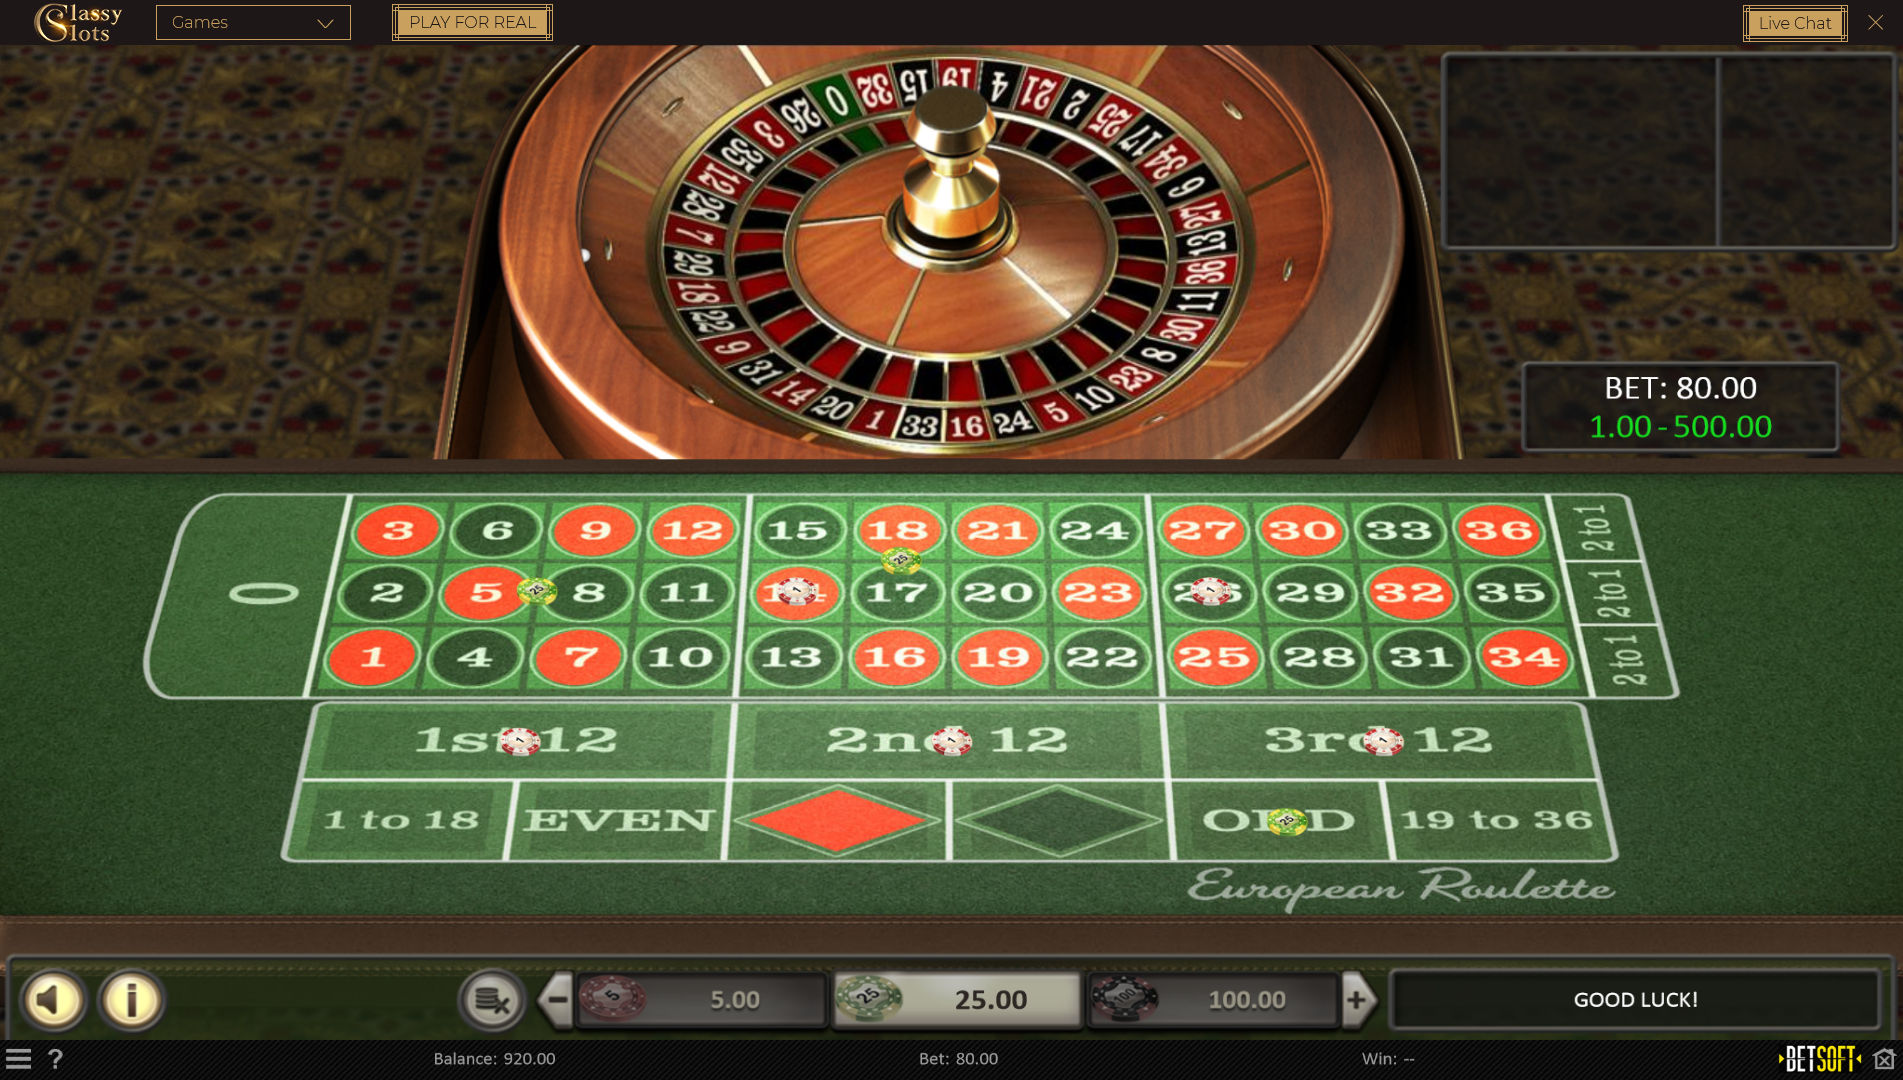 Classy Slots Casino Casino Games